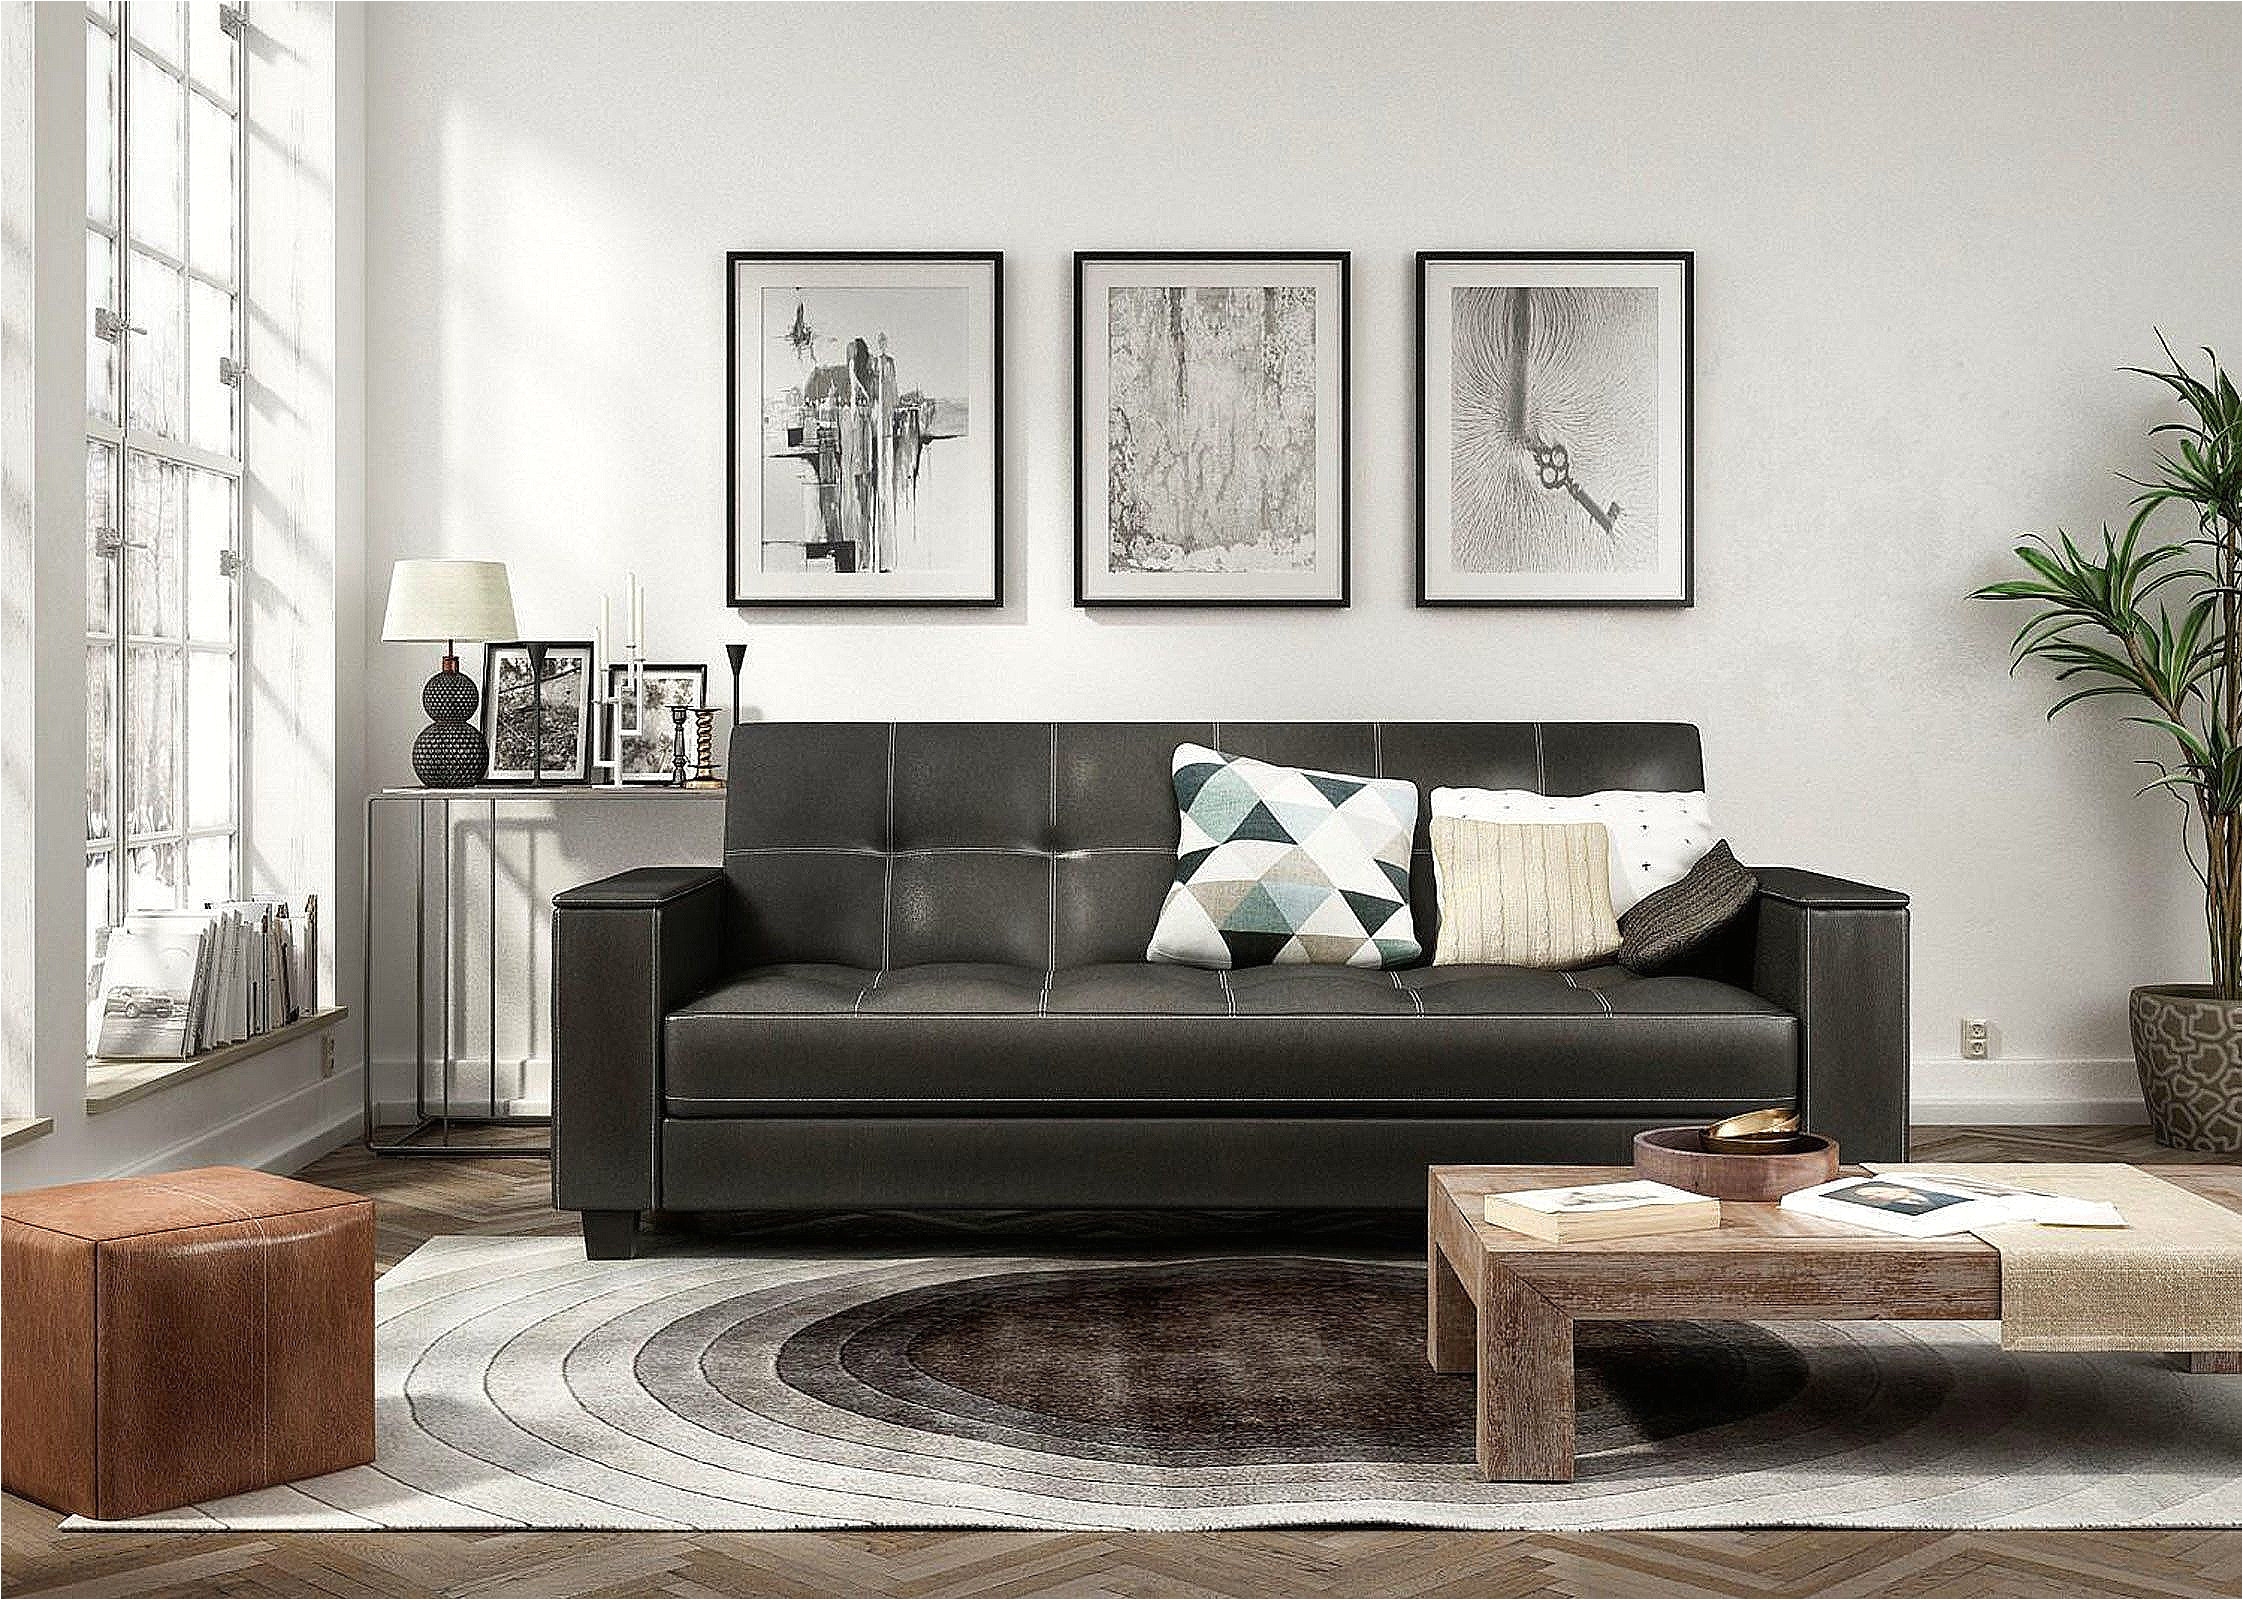 modern living room furniture new gunstige sofa macys furniture 0d design ideas of sitting room chairs